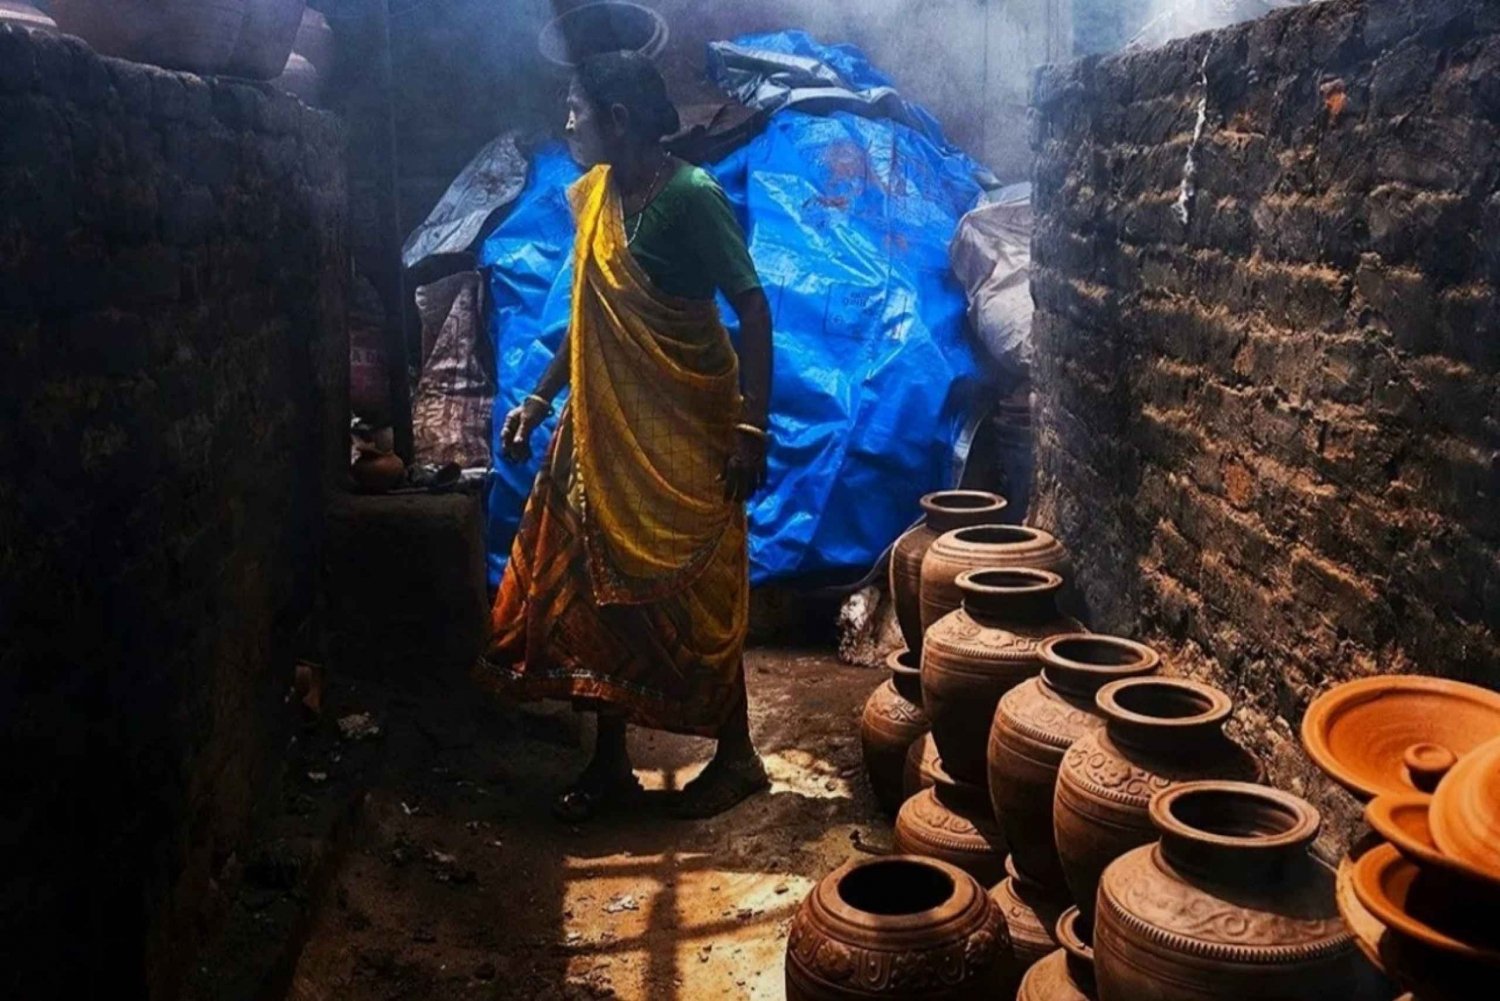 Mumbai: Private Dharavi Slum and Elephanta Caves Day Trip